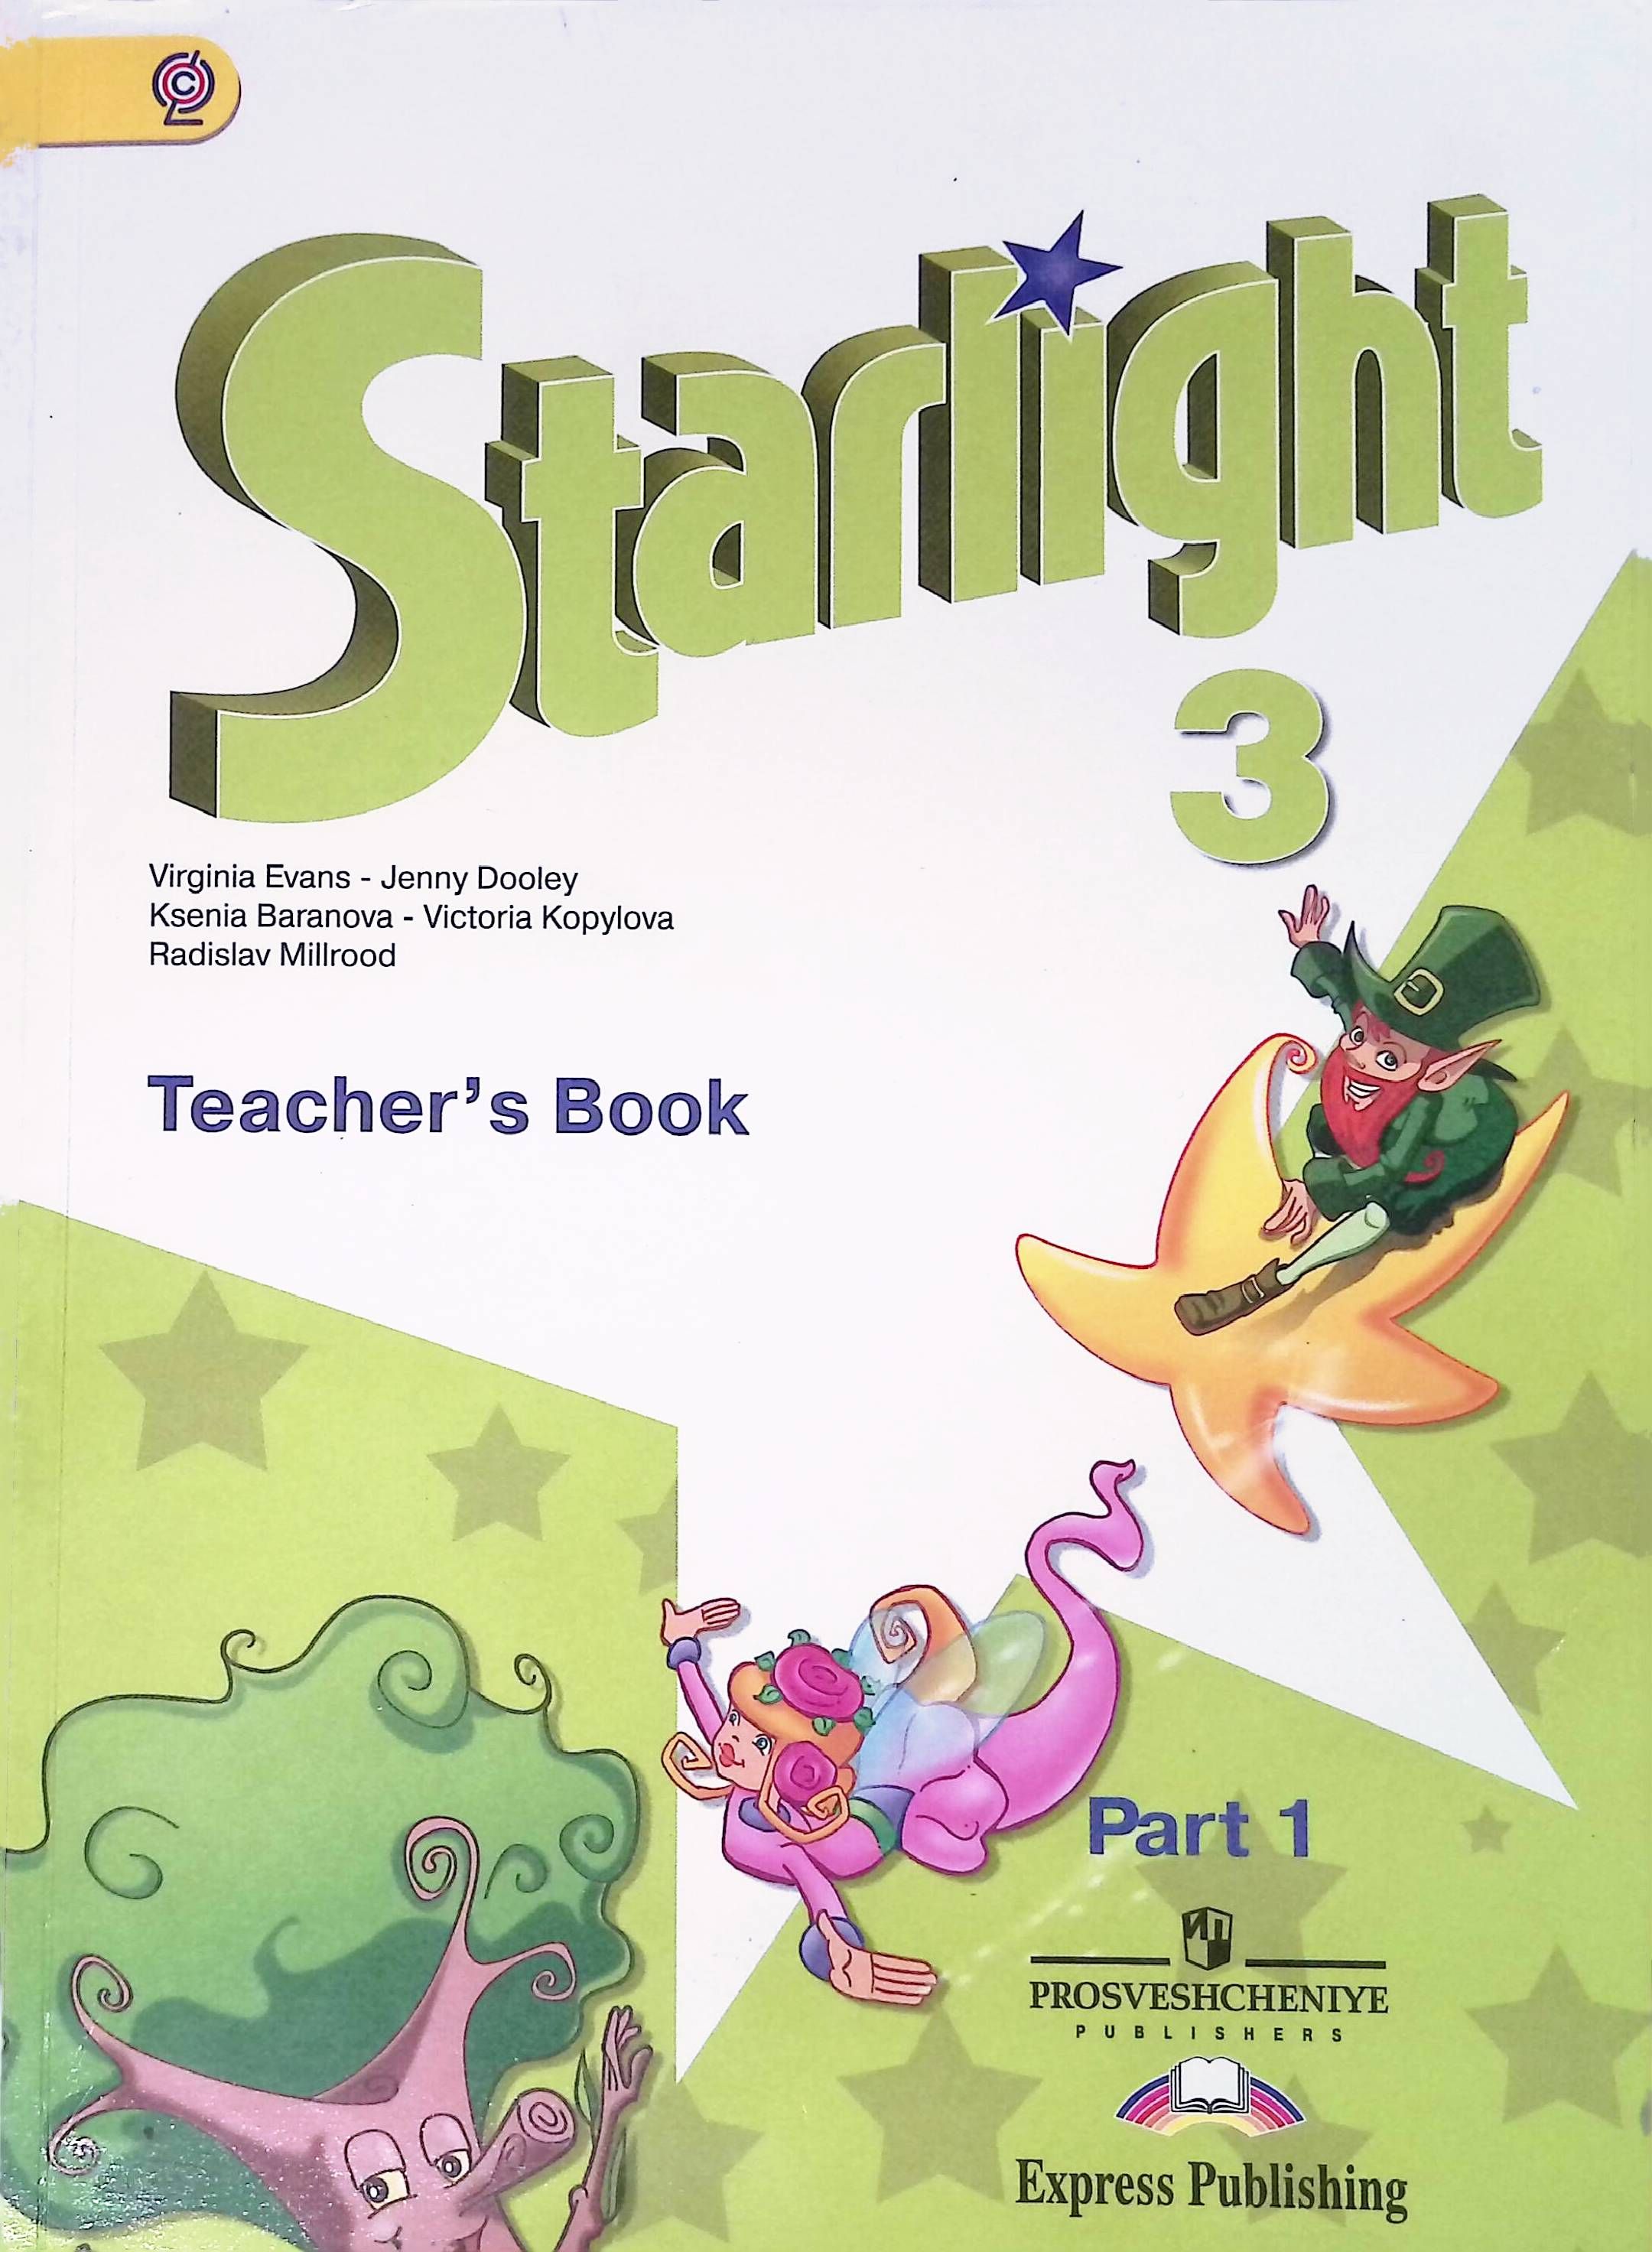 Starlight 2 students book